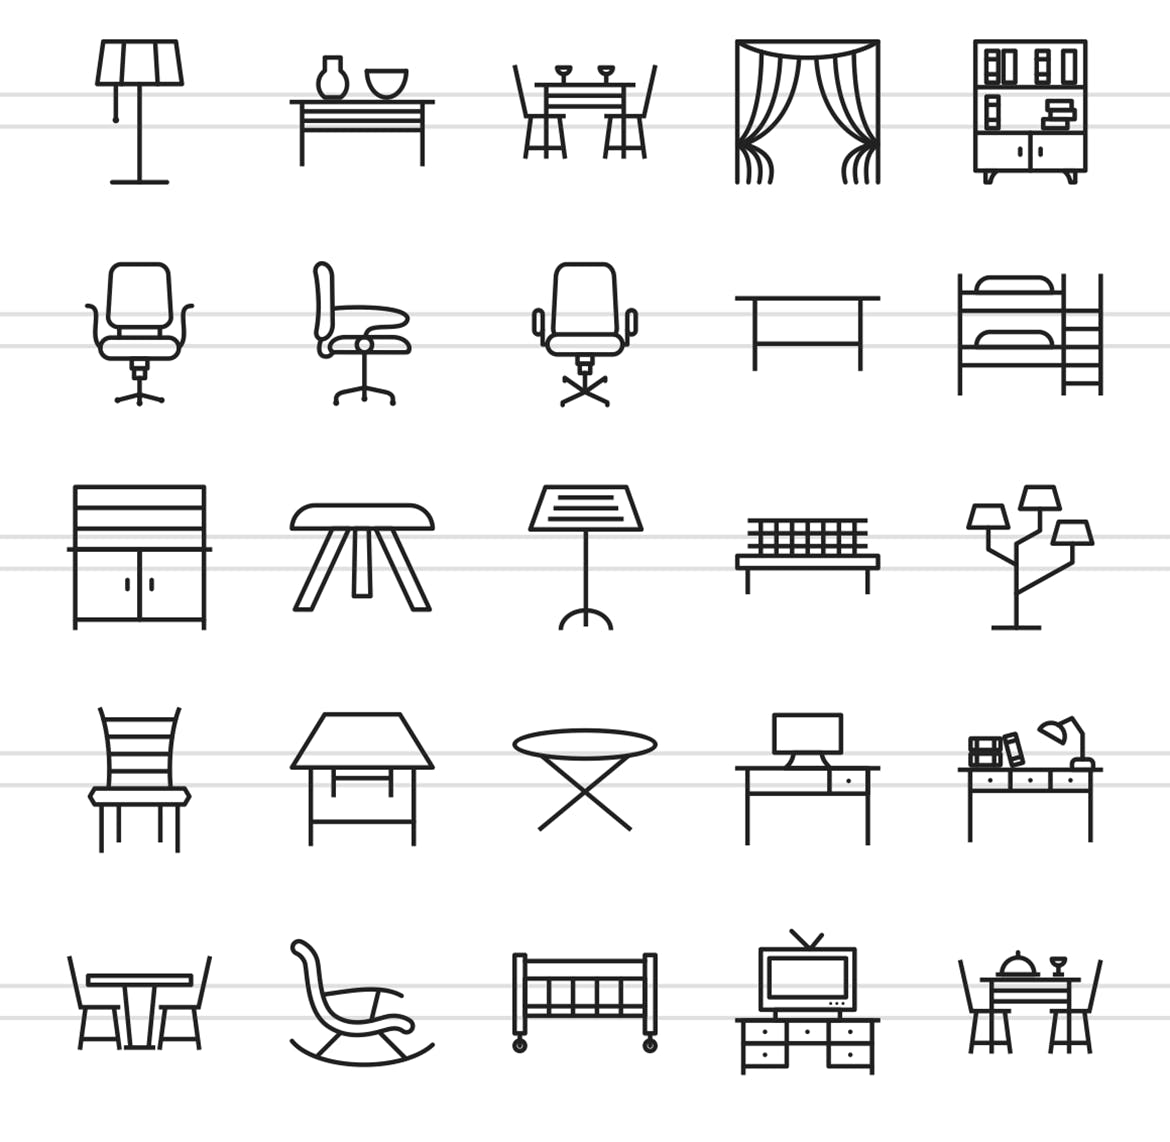 50枚家具系列线性非凡图库精选图标 II 50 Furniture Line Icons Season II插图(2)